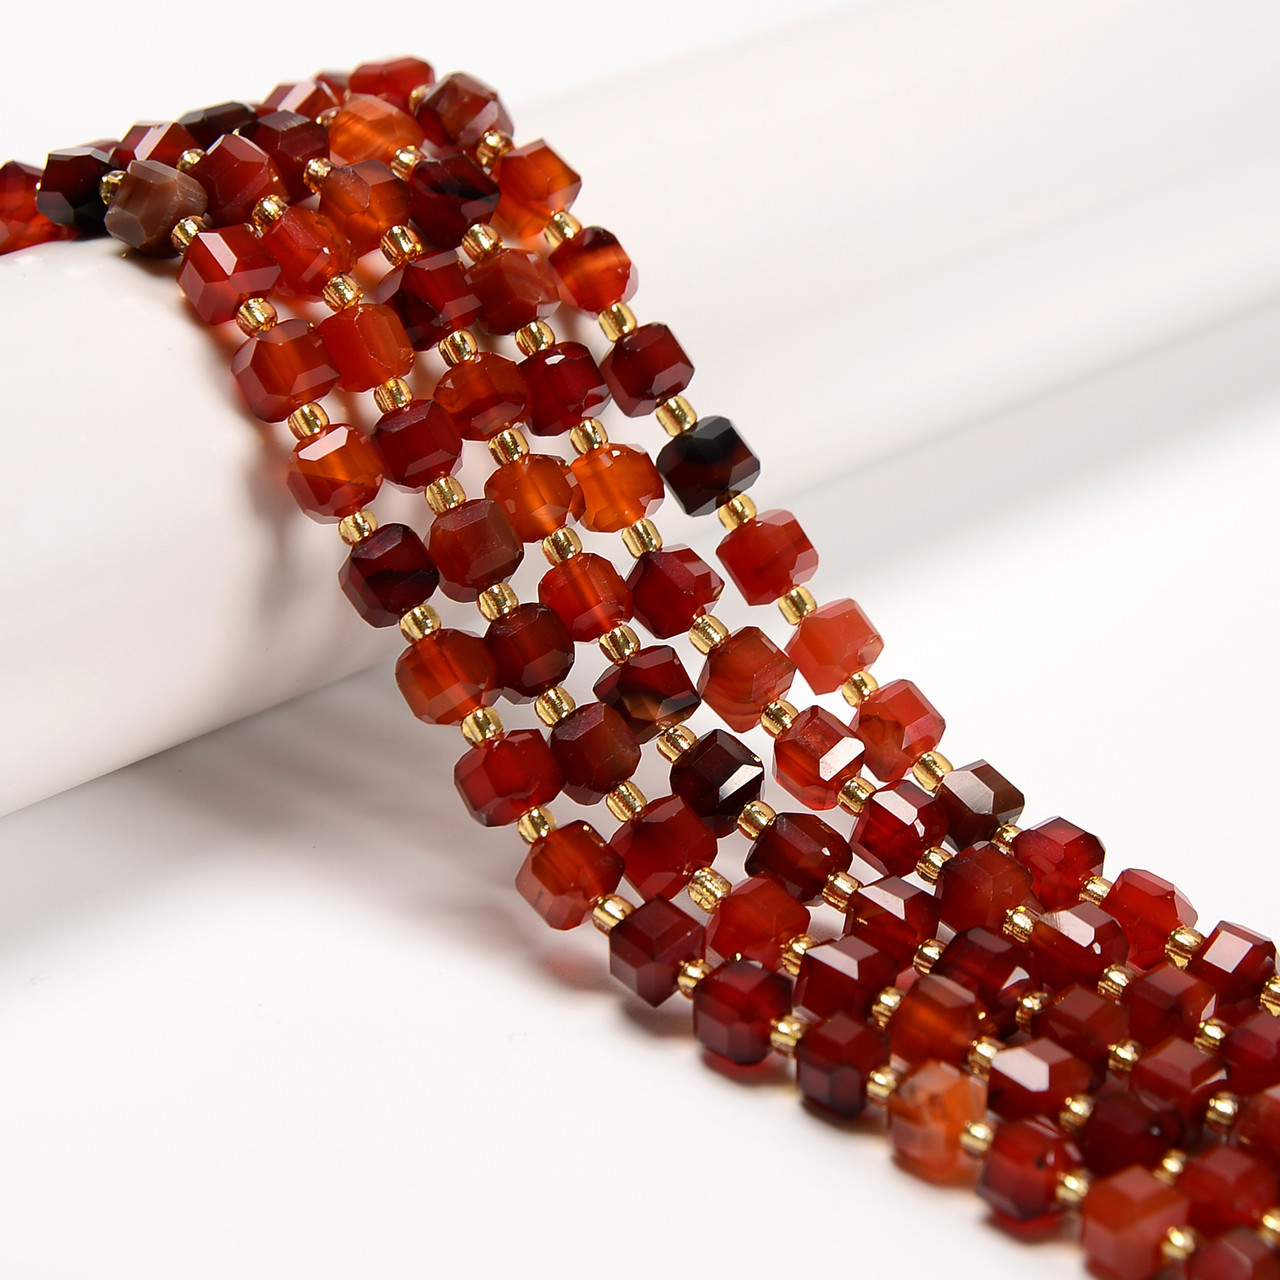 1foot Scarlet Red glass beads prism chain strand part dark brass